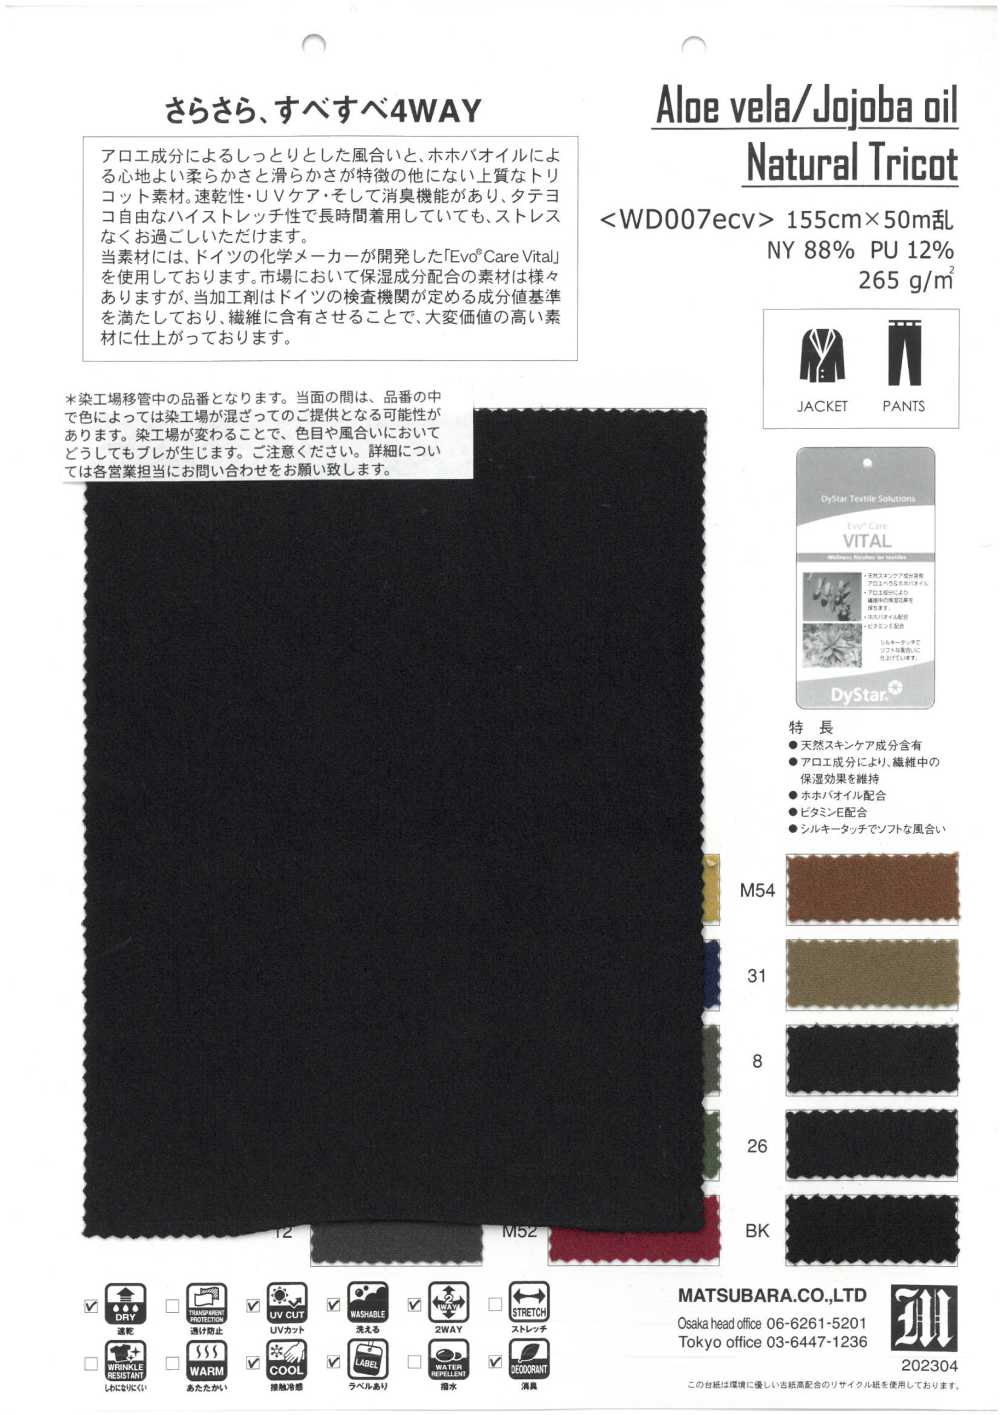 WD007ECV Aloe Vela/Jojoba Oil Natural Tricot[Textile / Fabric] Matsubara